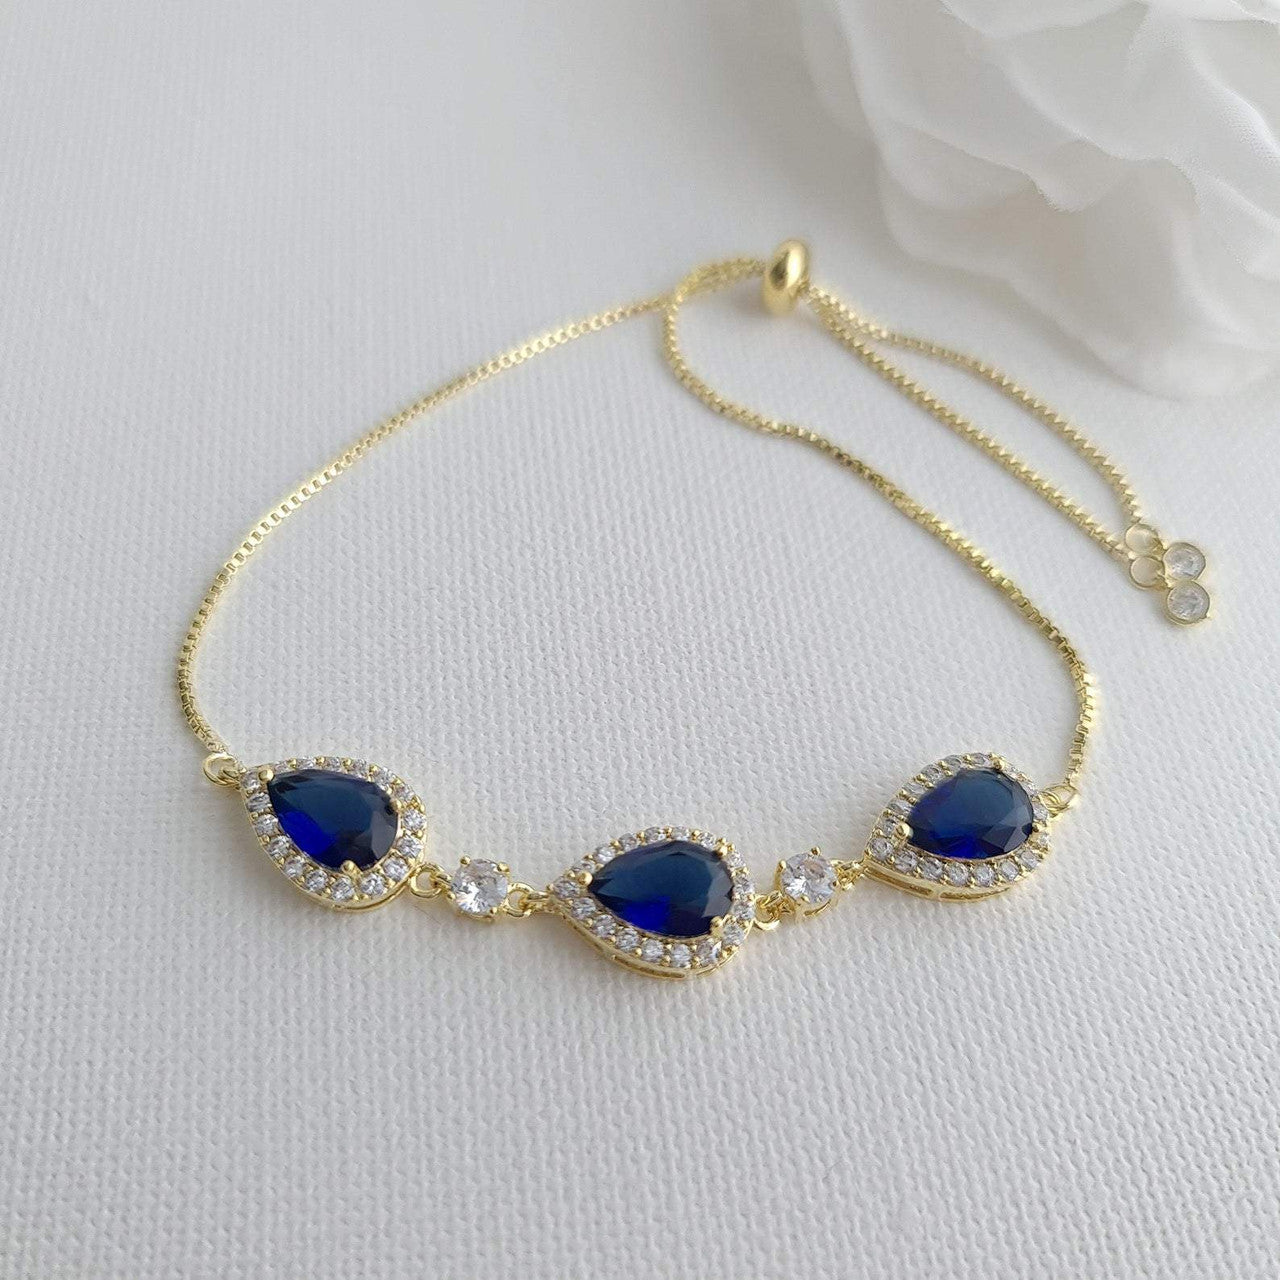 Bracelet in Sapphire Blue & Rose Gold for Bride & Bridesmaids-Aoi